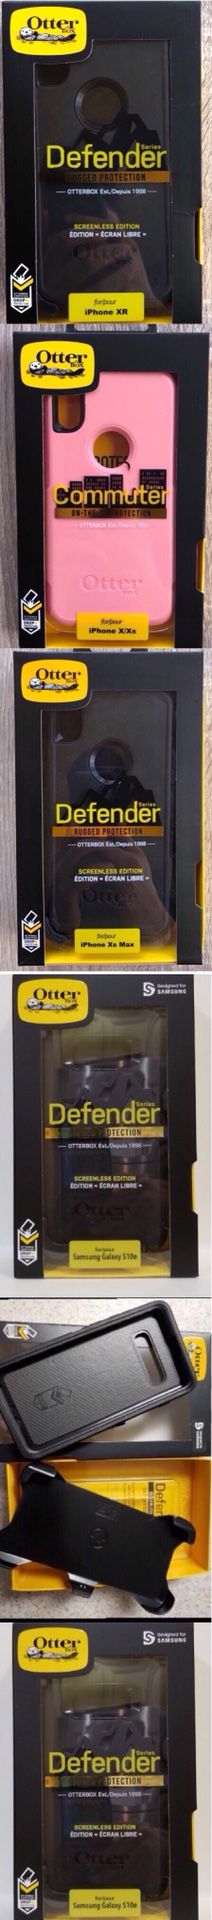 OtterBox Defender series Case brand new otter box fits Samsung Galaxy - S9 - S10 E plus + Edge - 8 - 9 & IPhone 6 -7 - 8 - plus - X -XR-Xs Max